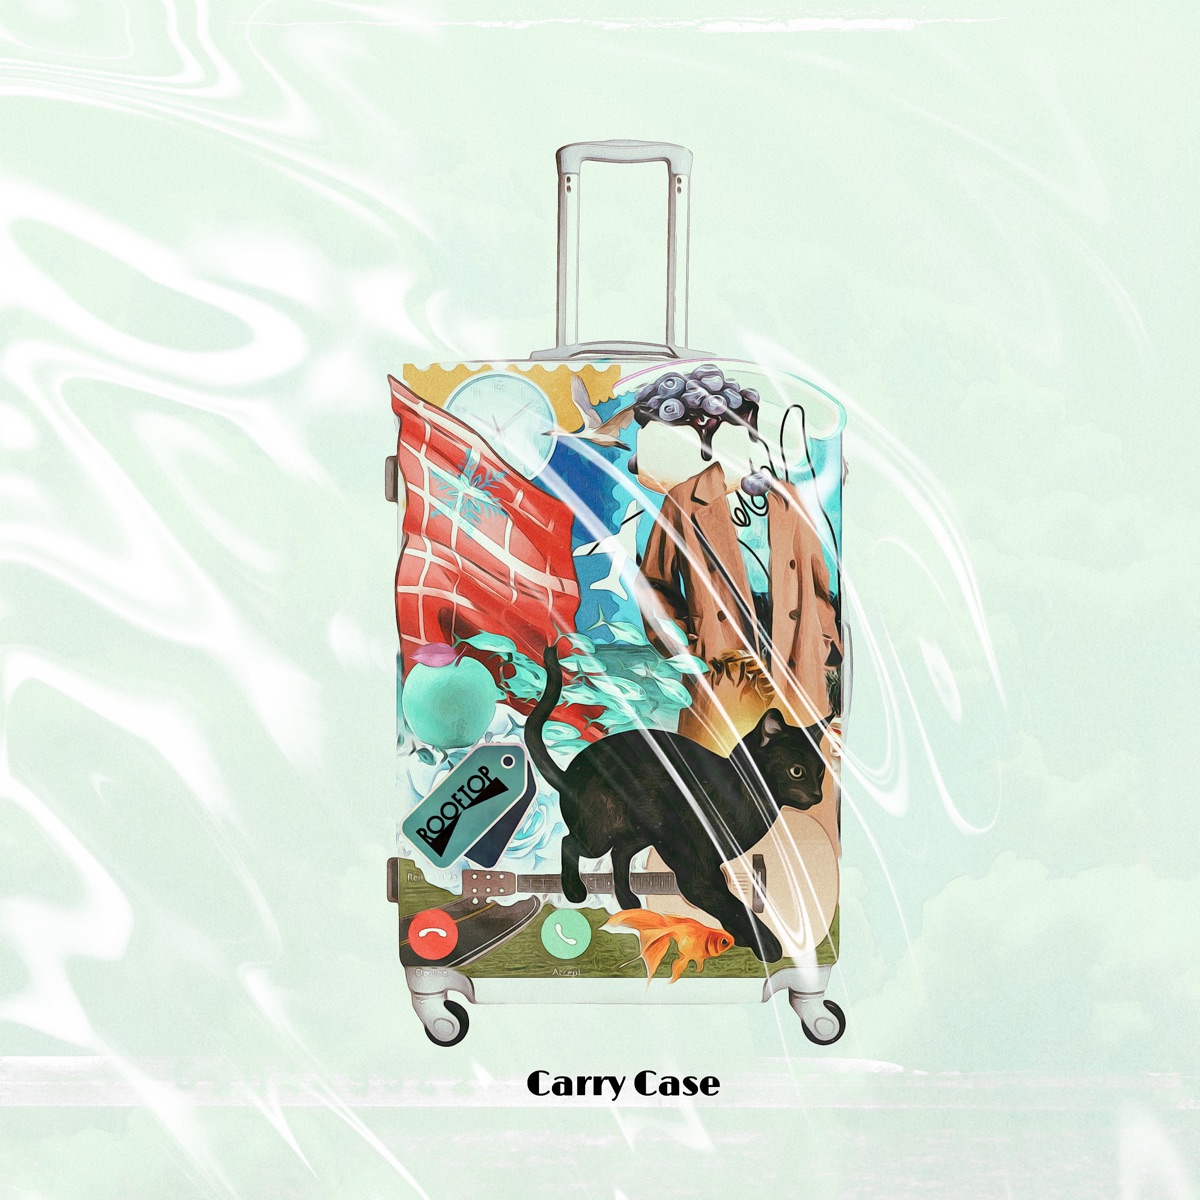 『A夏目 - インディゴアイランド』収録の『Carry Case』ジャケット